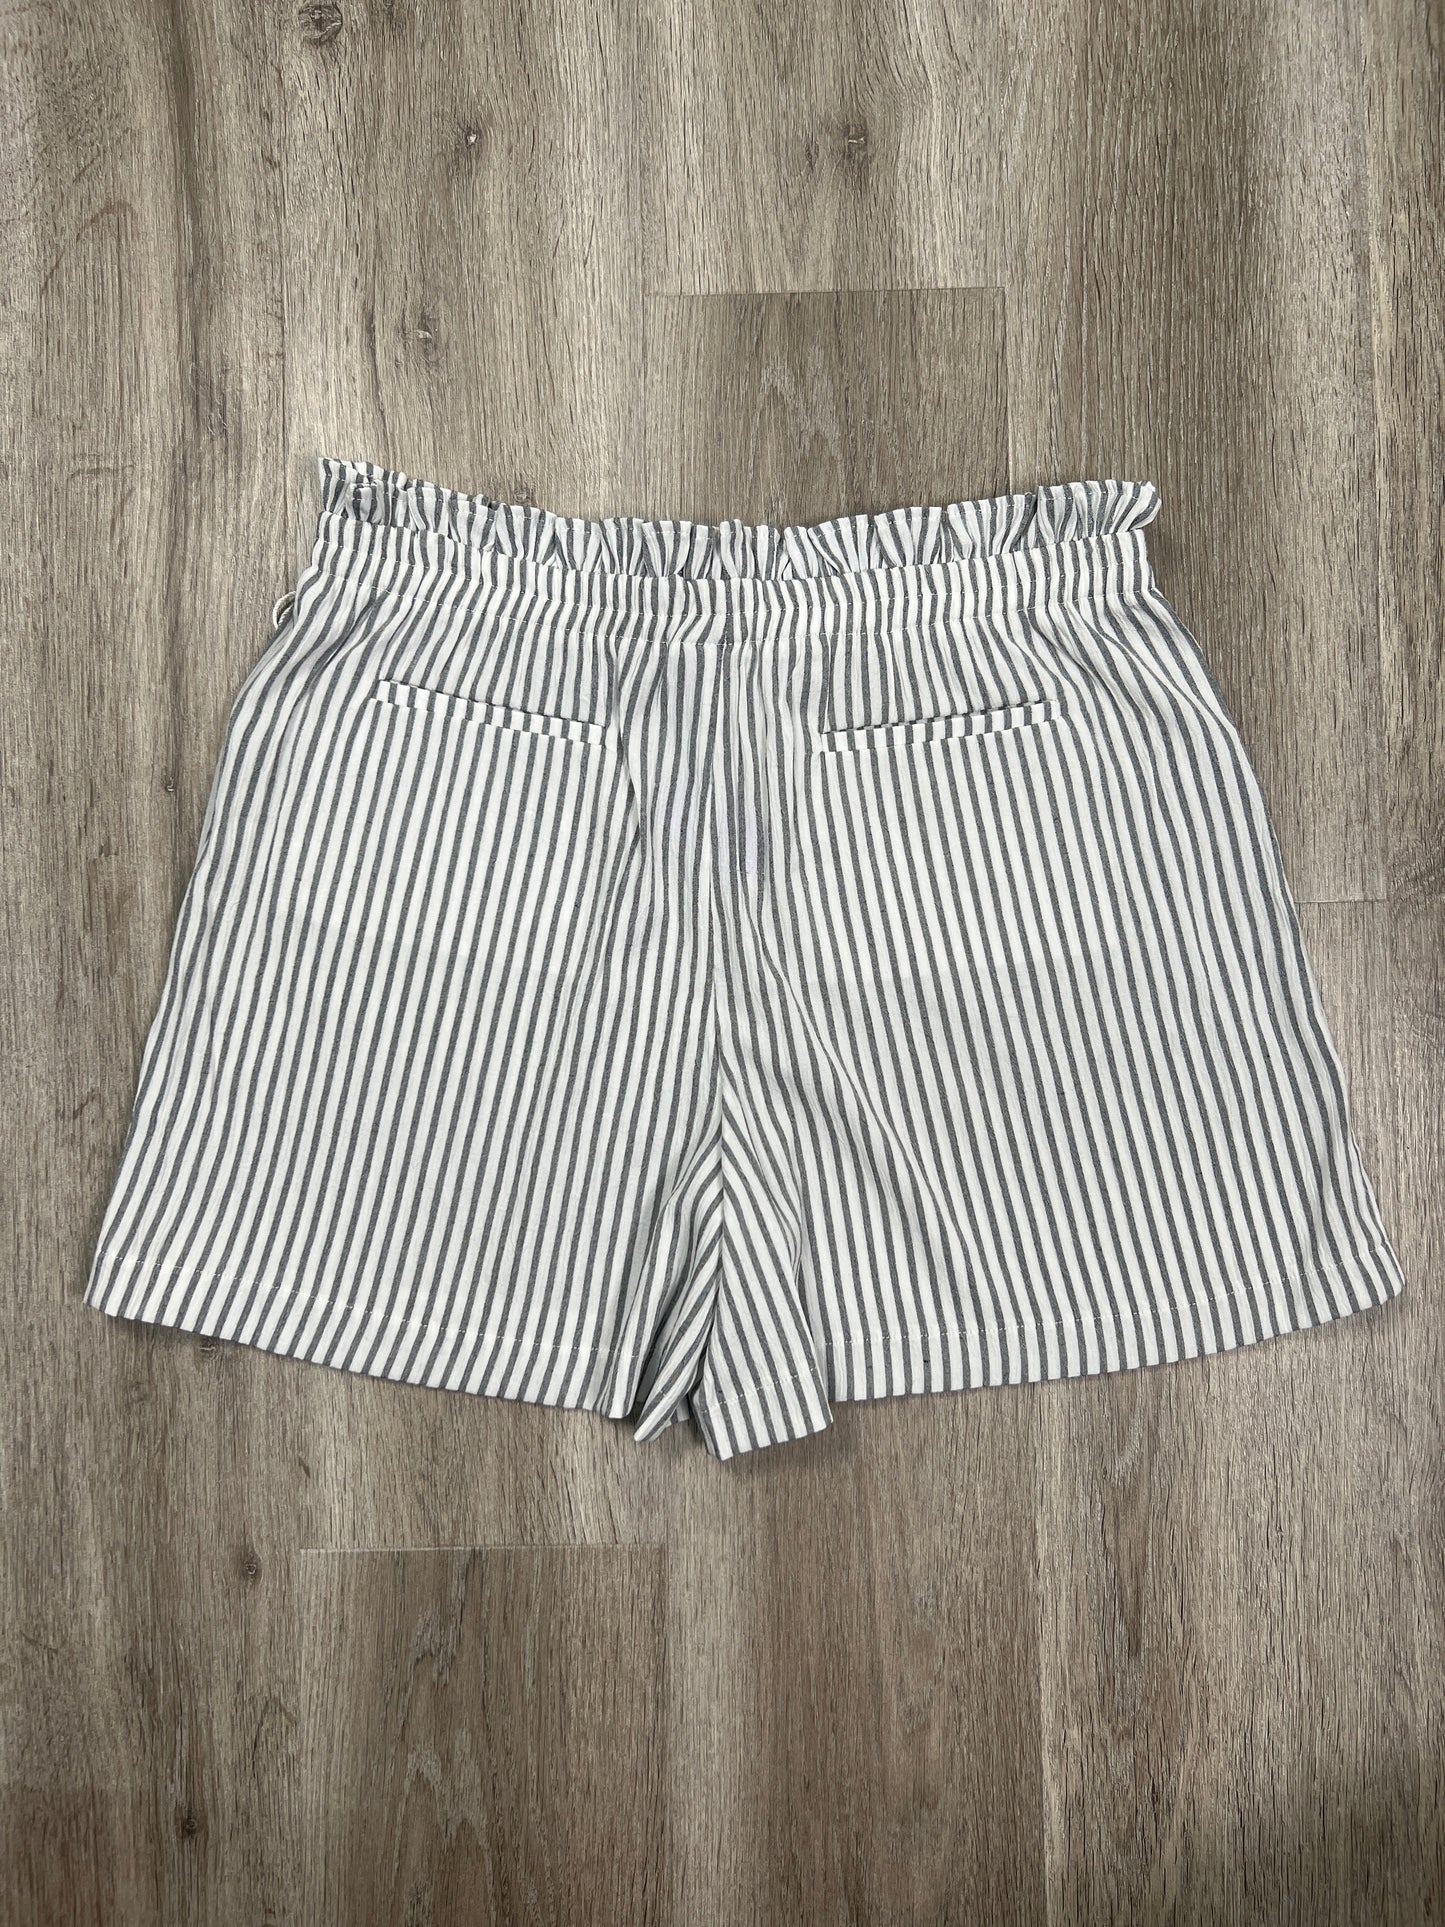 Striped Pattern Shorts Worthington , Size L